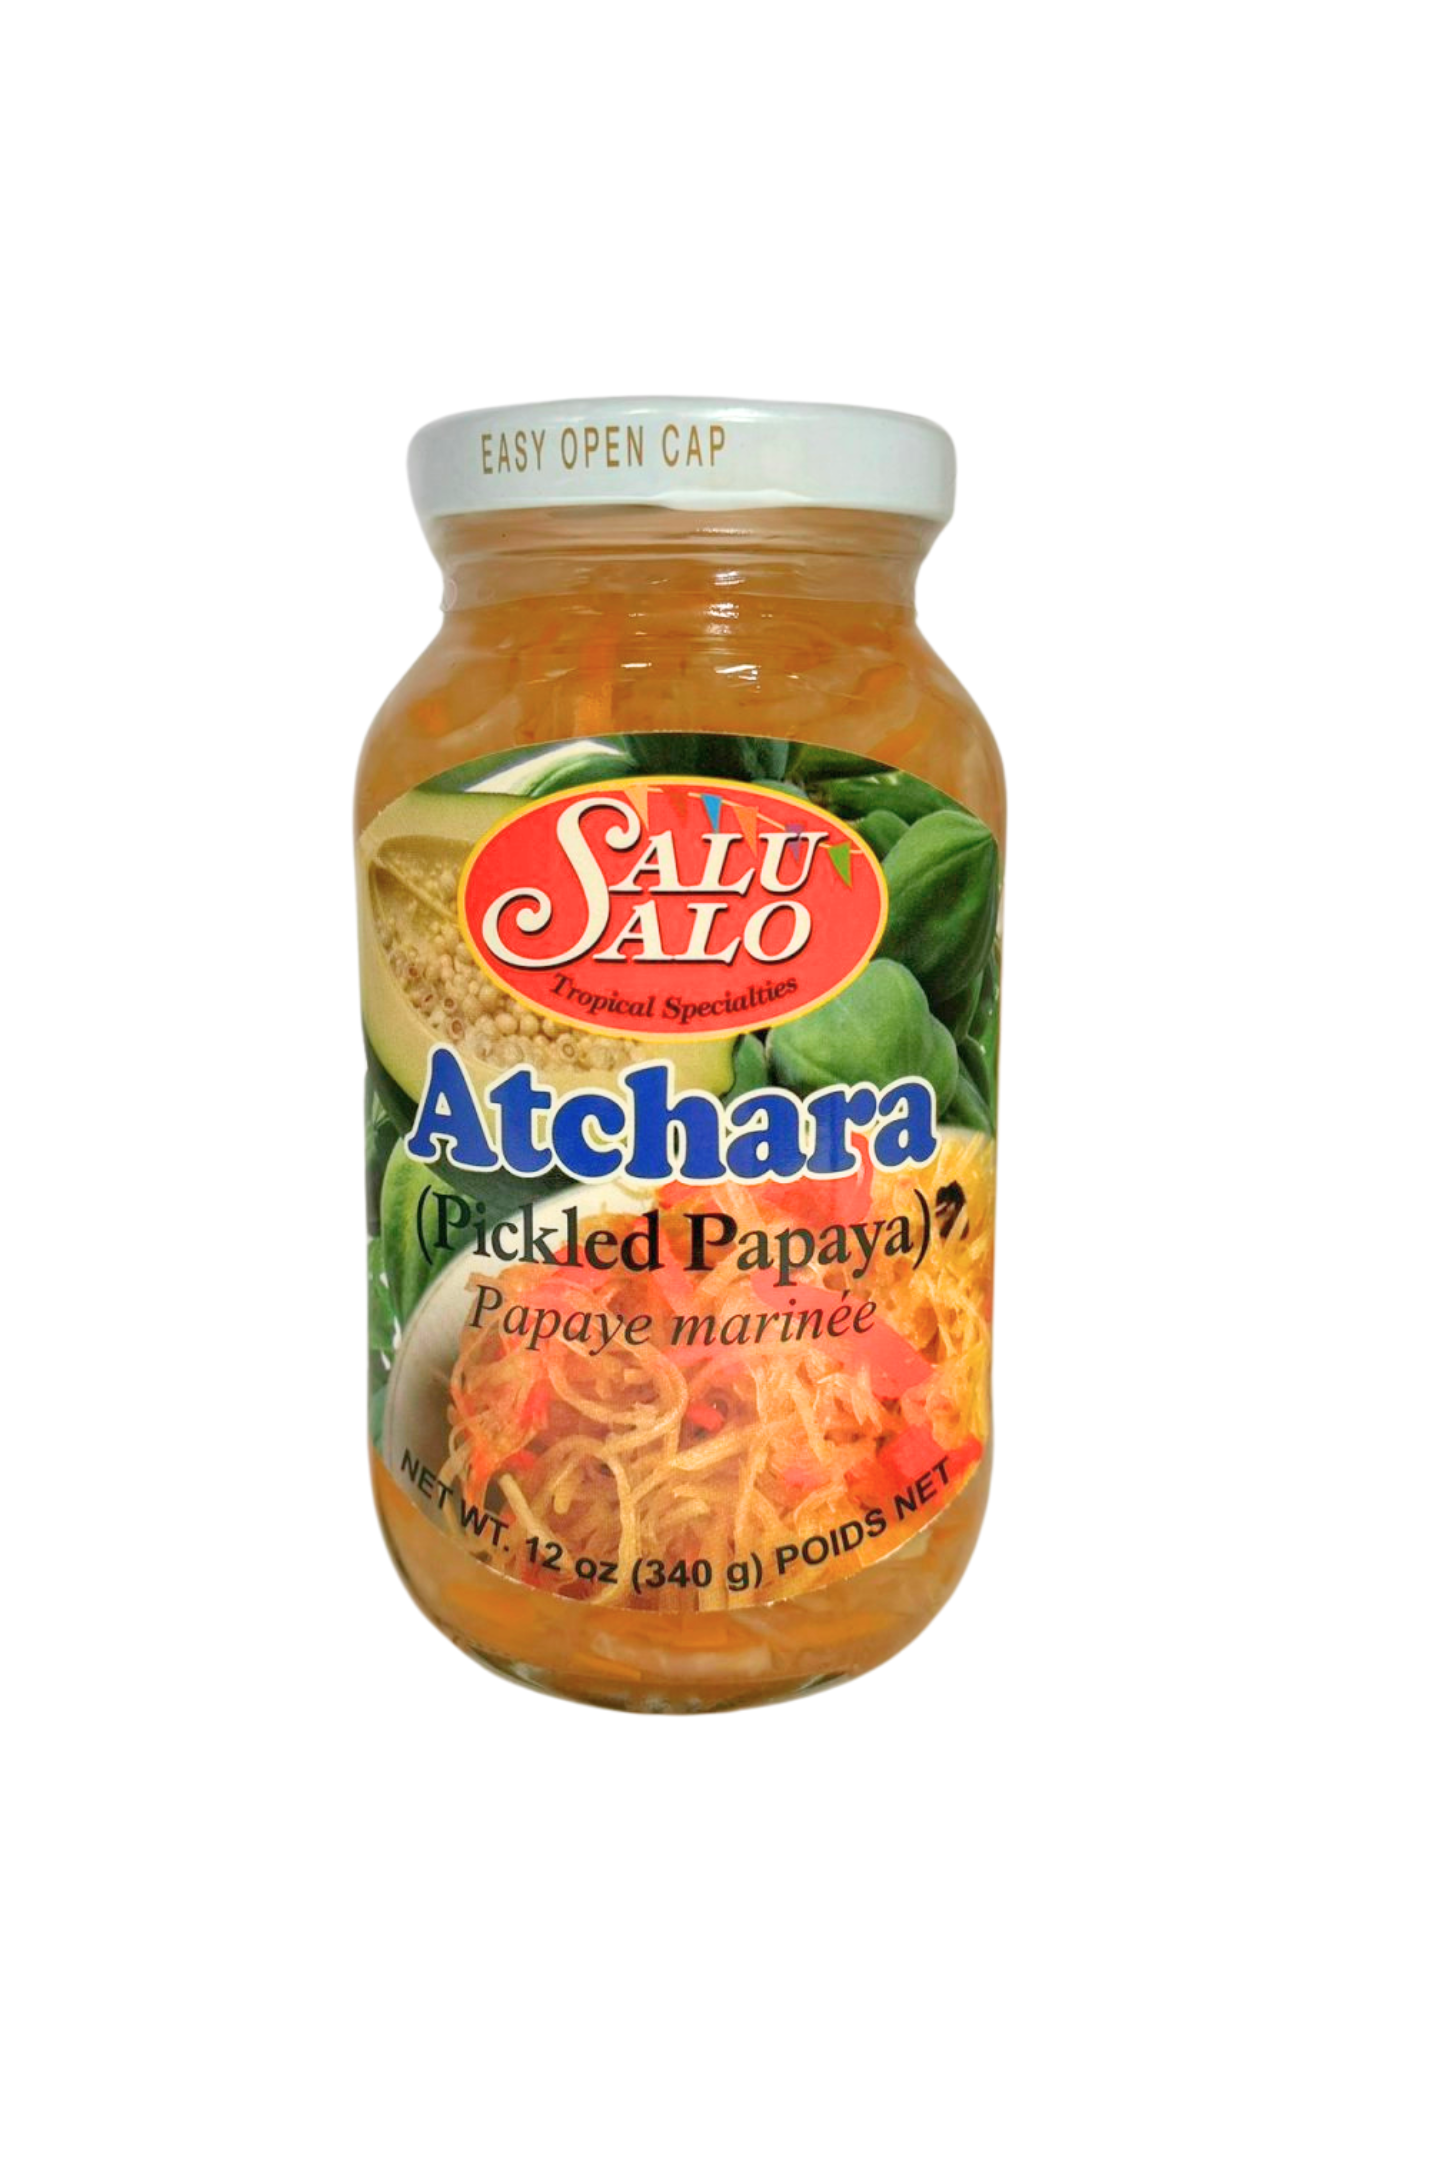 Salu Salo Atchara (Pickled Papaya) 340g